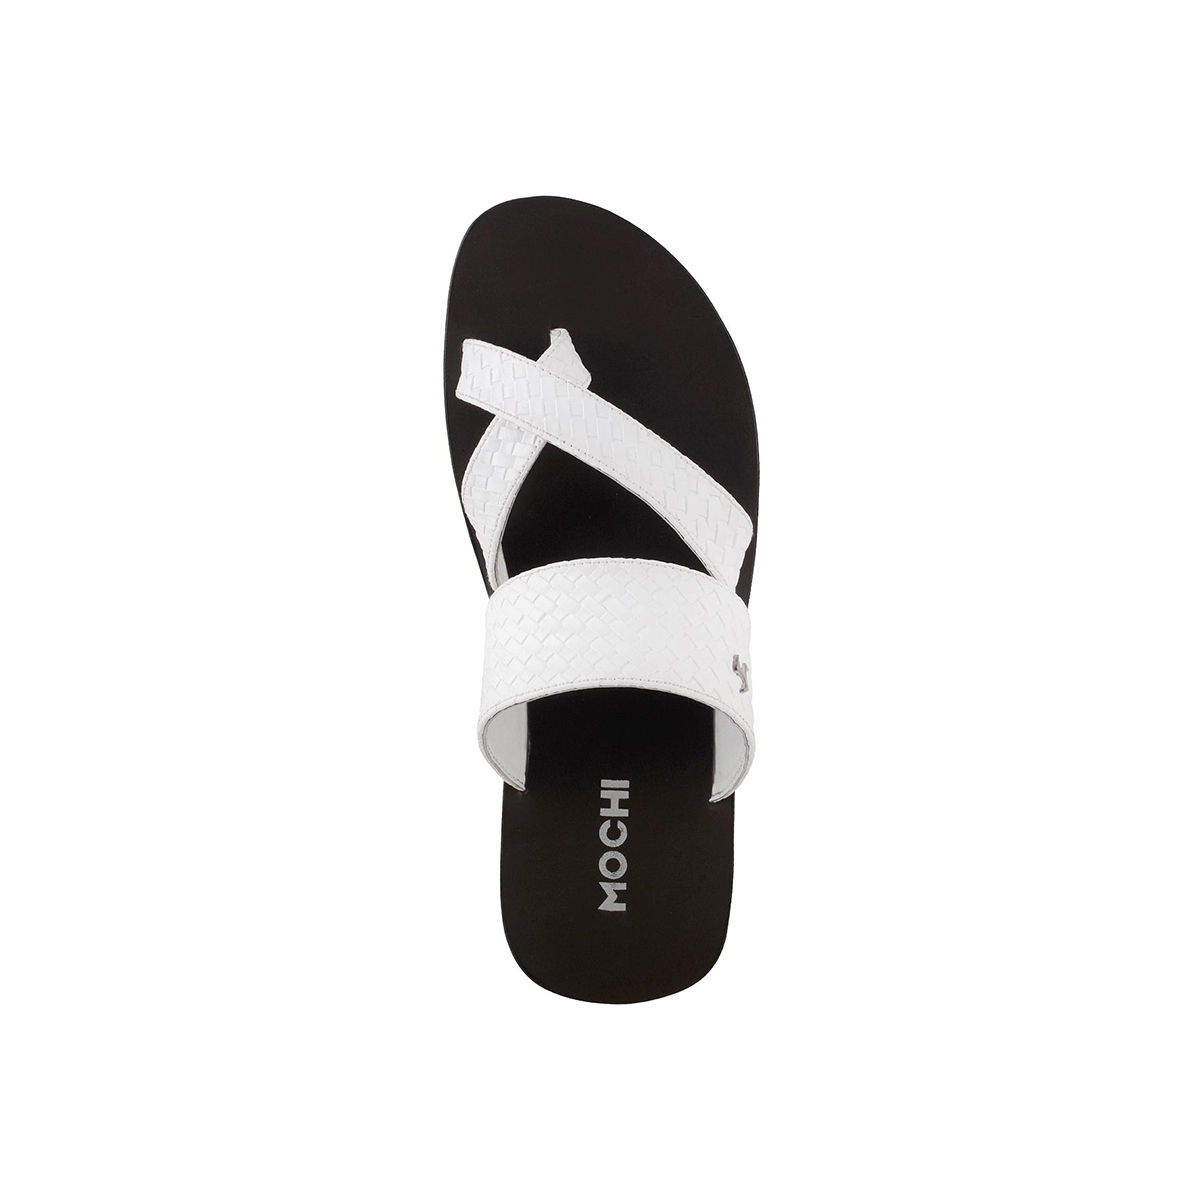 Update 230+ mochi white slippers latest